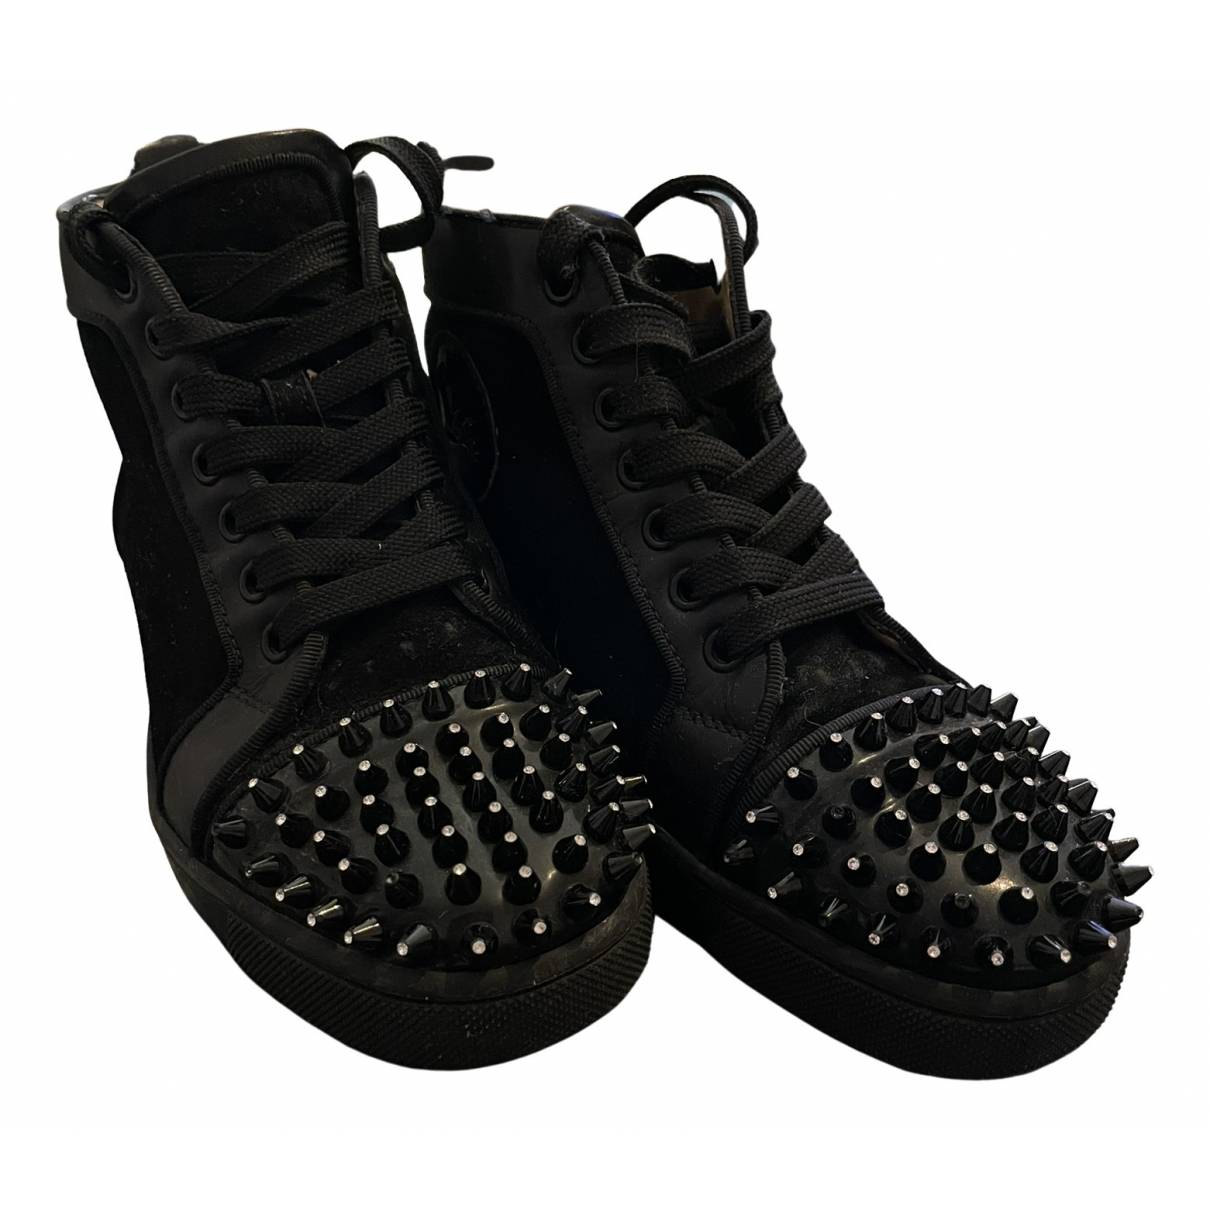 Lou spikes leather trainers Christian Louboutin Black size 35.5 EU